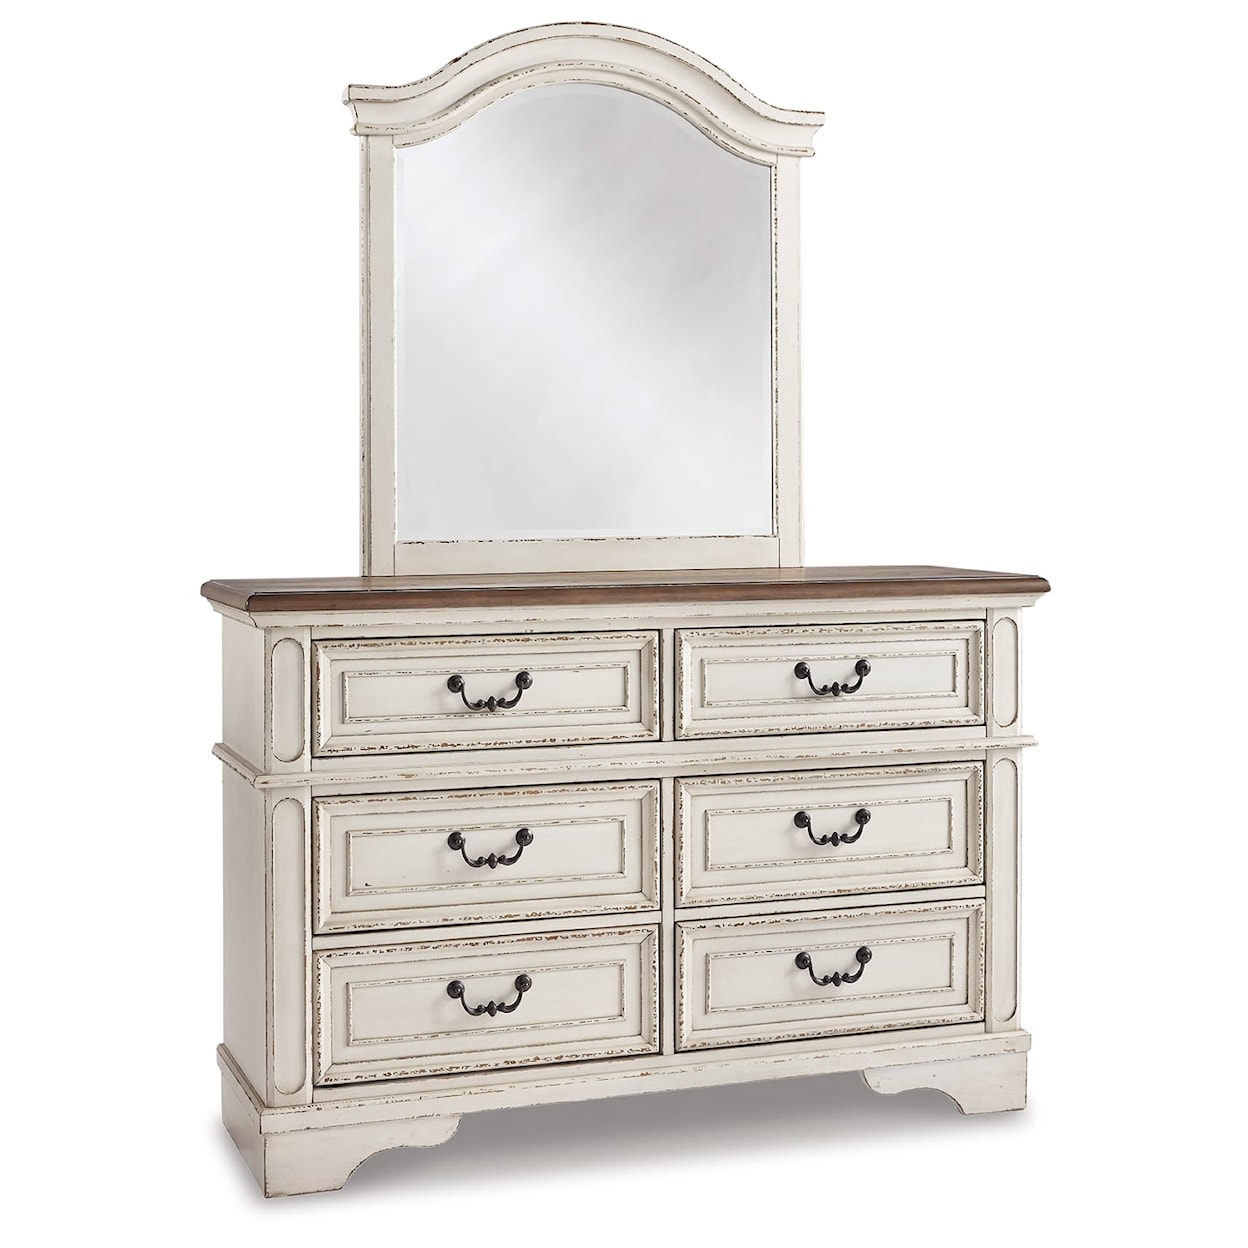 Ashley Furniture Signature Design Realyn Dresser and Mirror